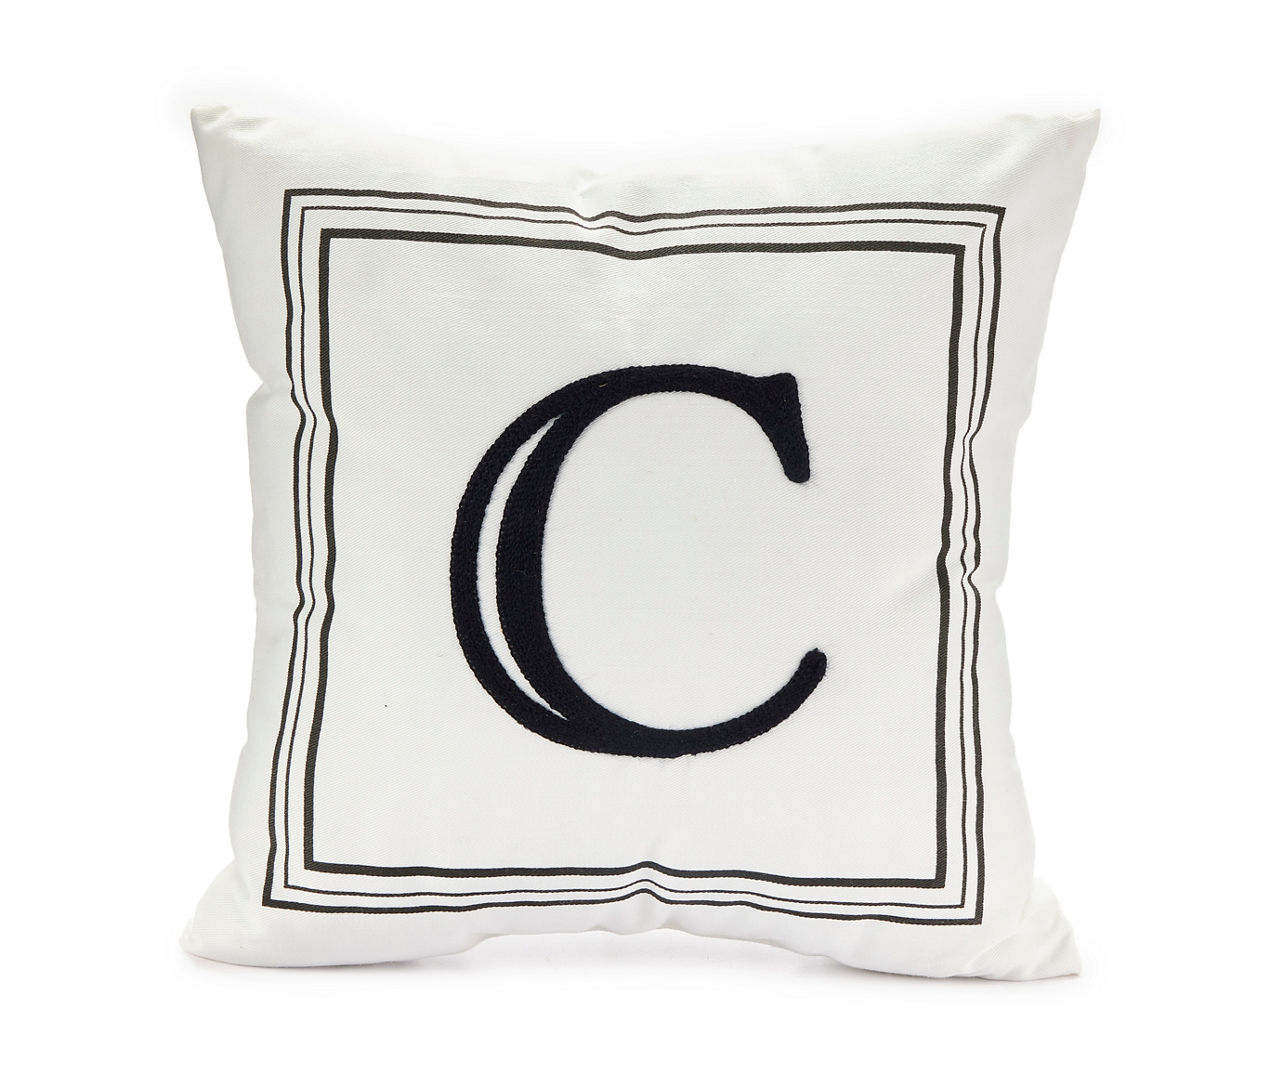 "C" White & Black Bordered Initial Square Throw Pillow